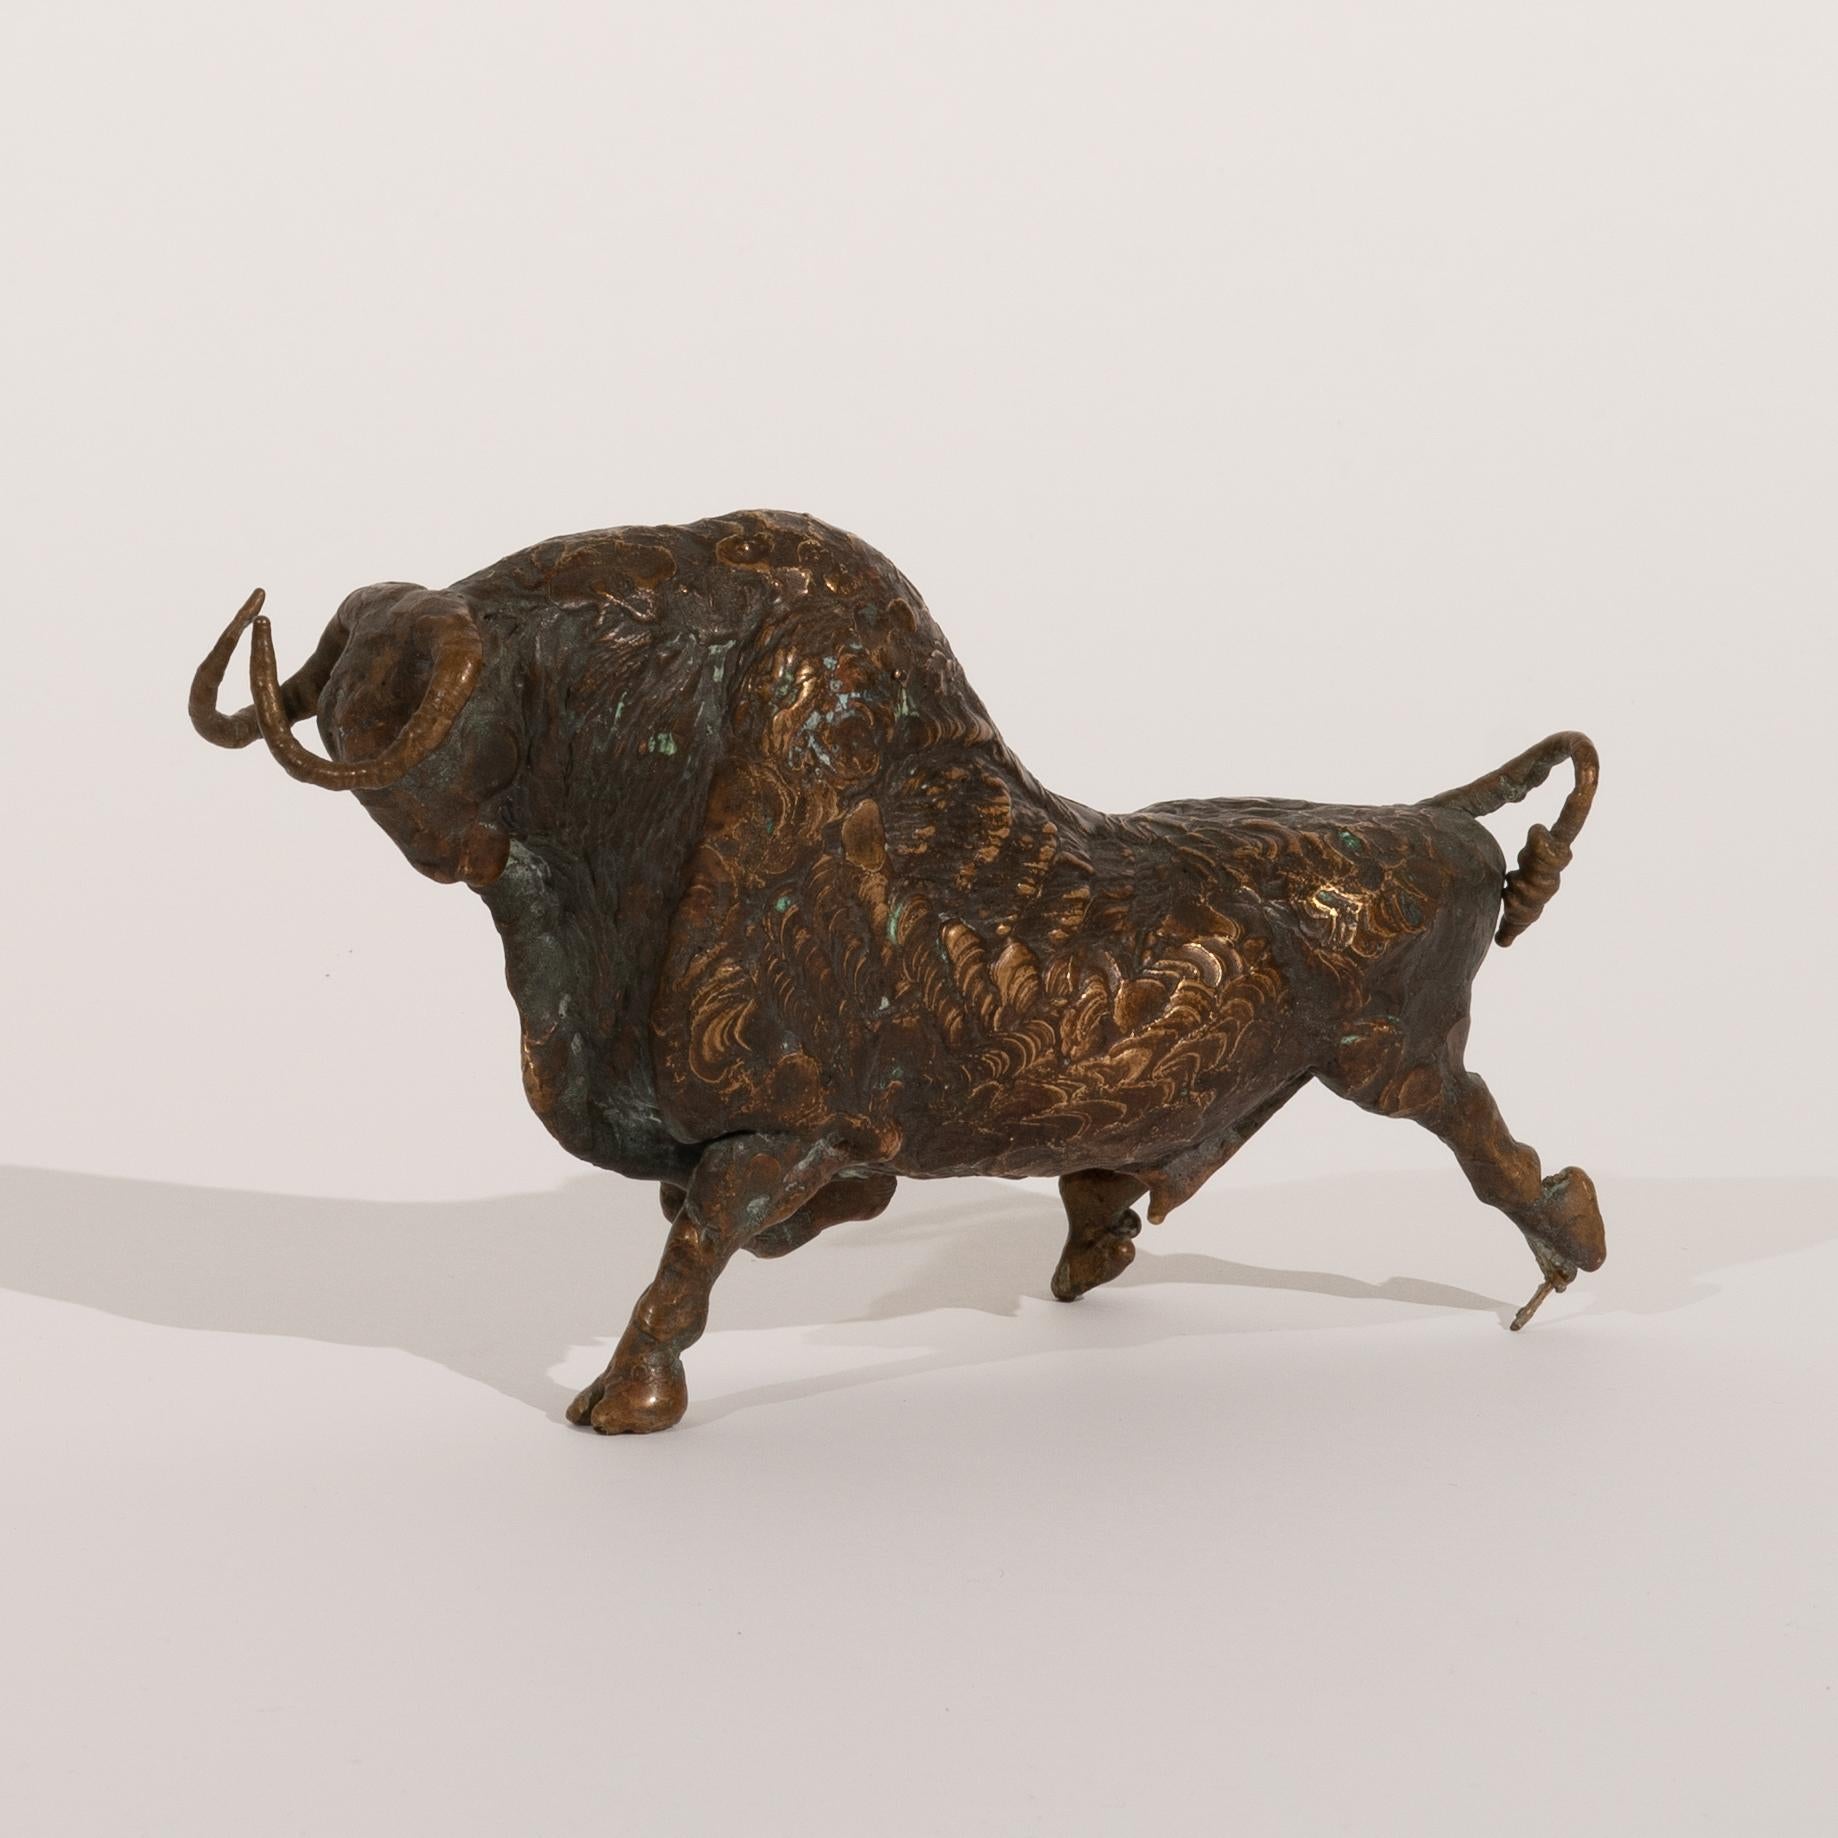 Ernesto Gonzalez Figurative Sculpture - Ernesto Gonzales "El Toro", patinated bronze sculpture